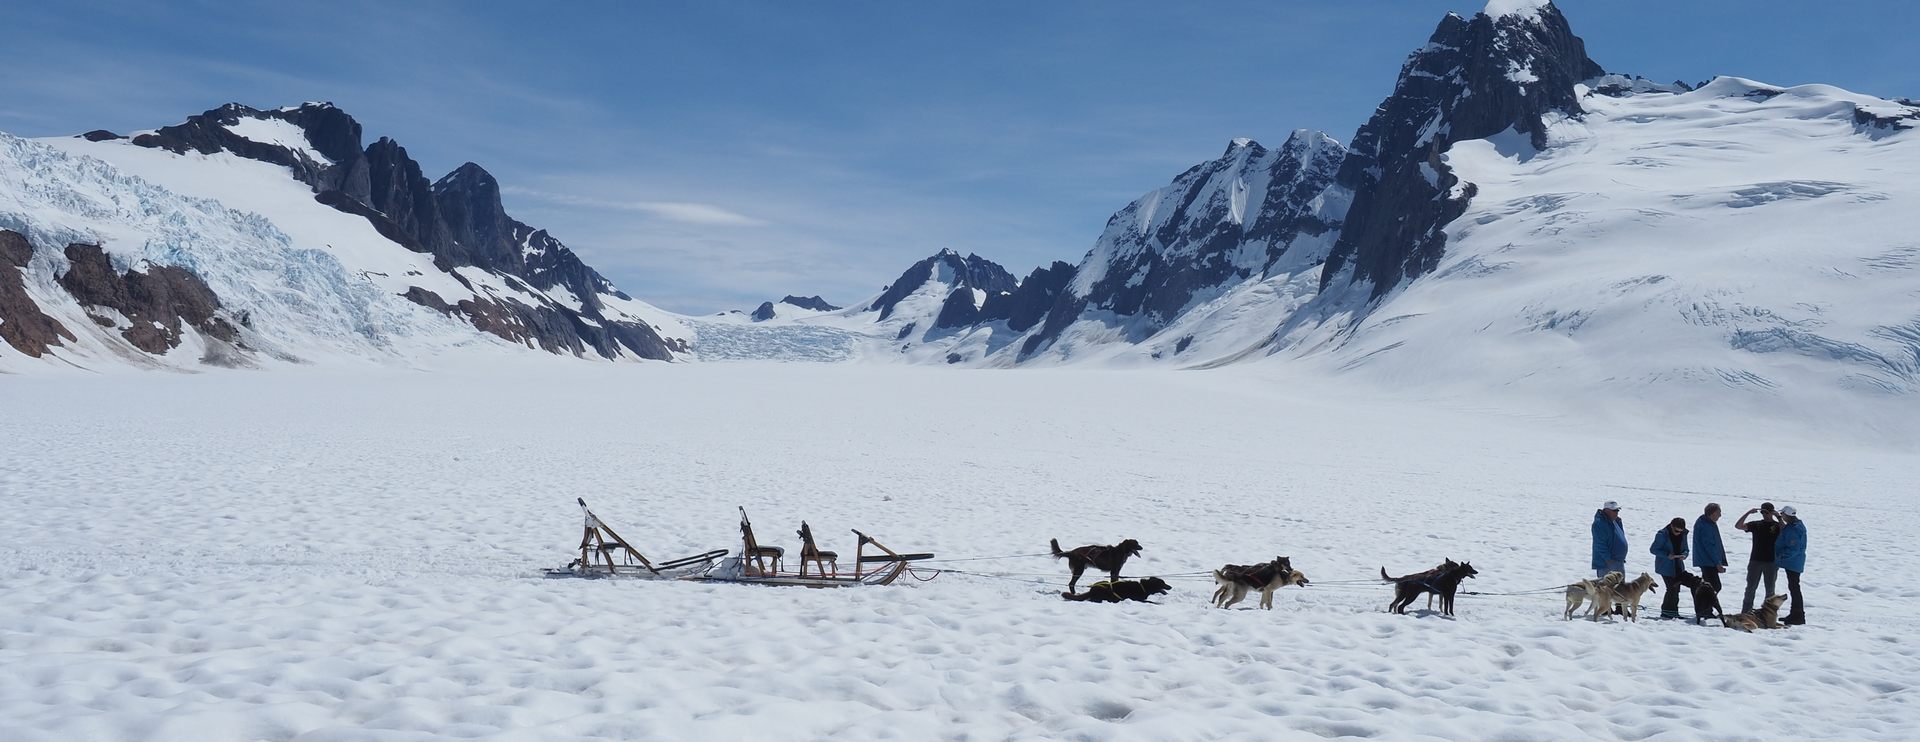 Glacier Dog Sledding Tour Image 1